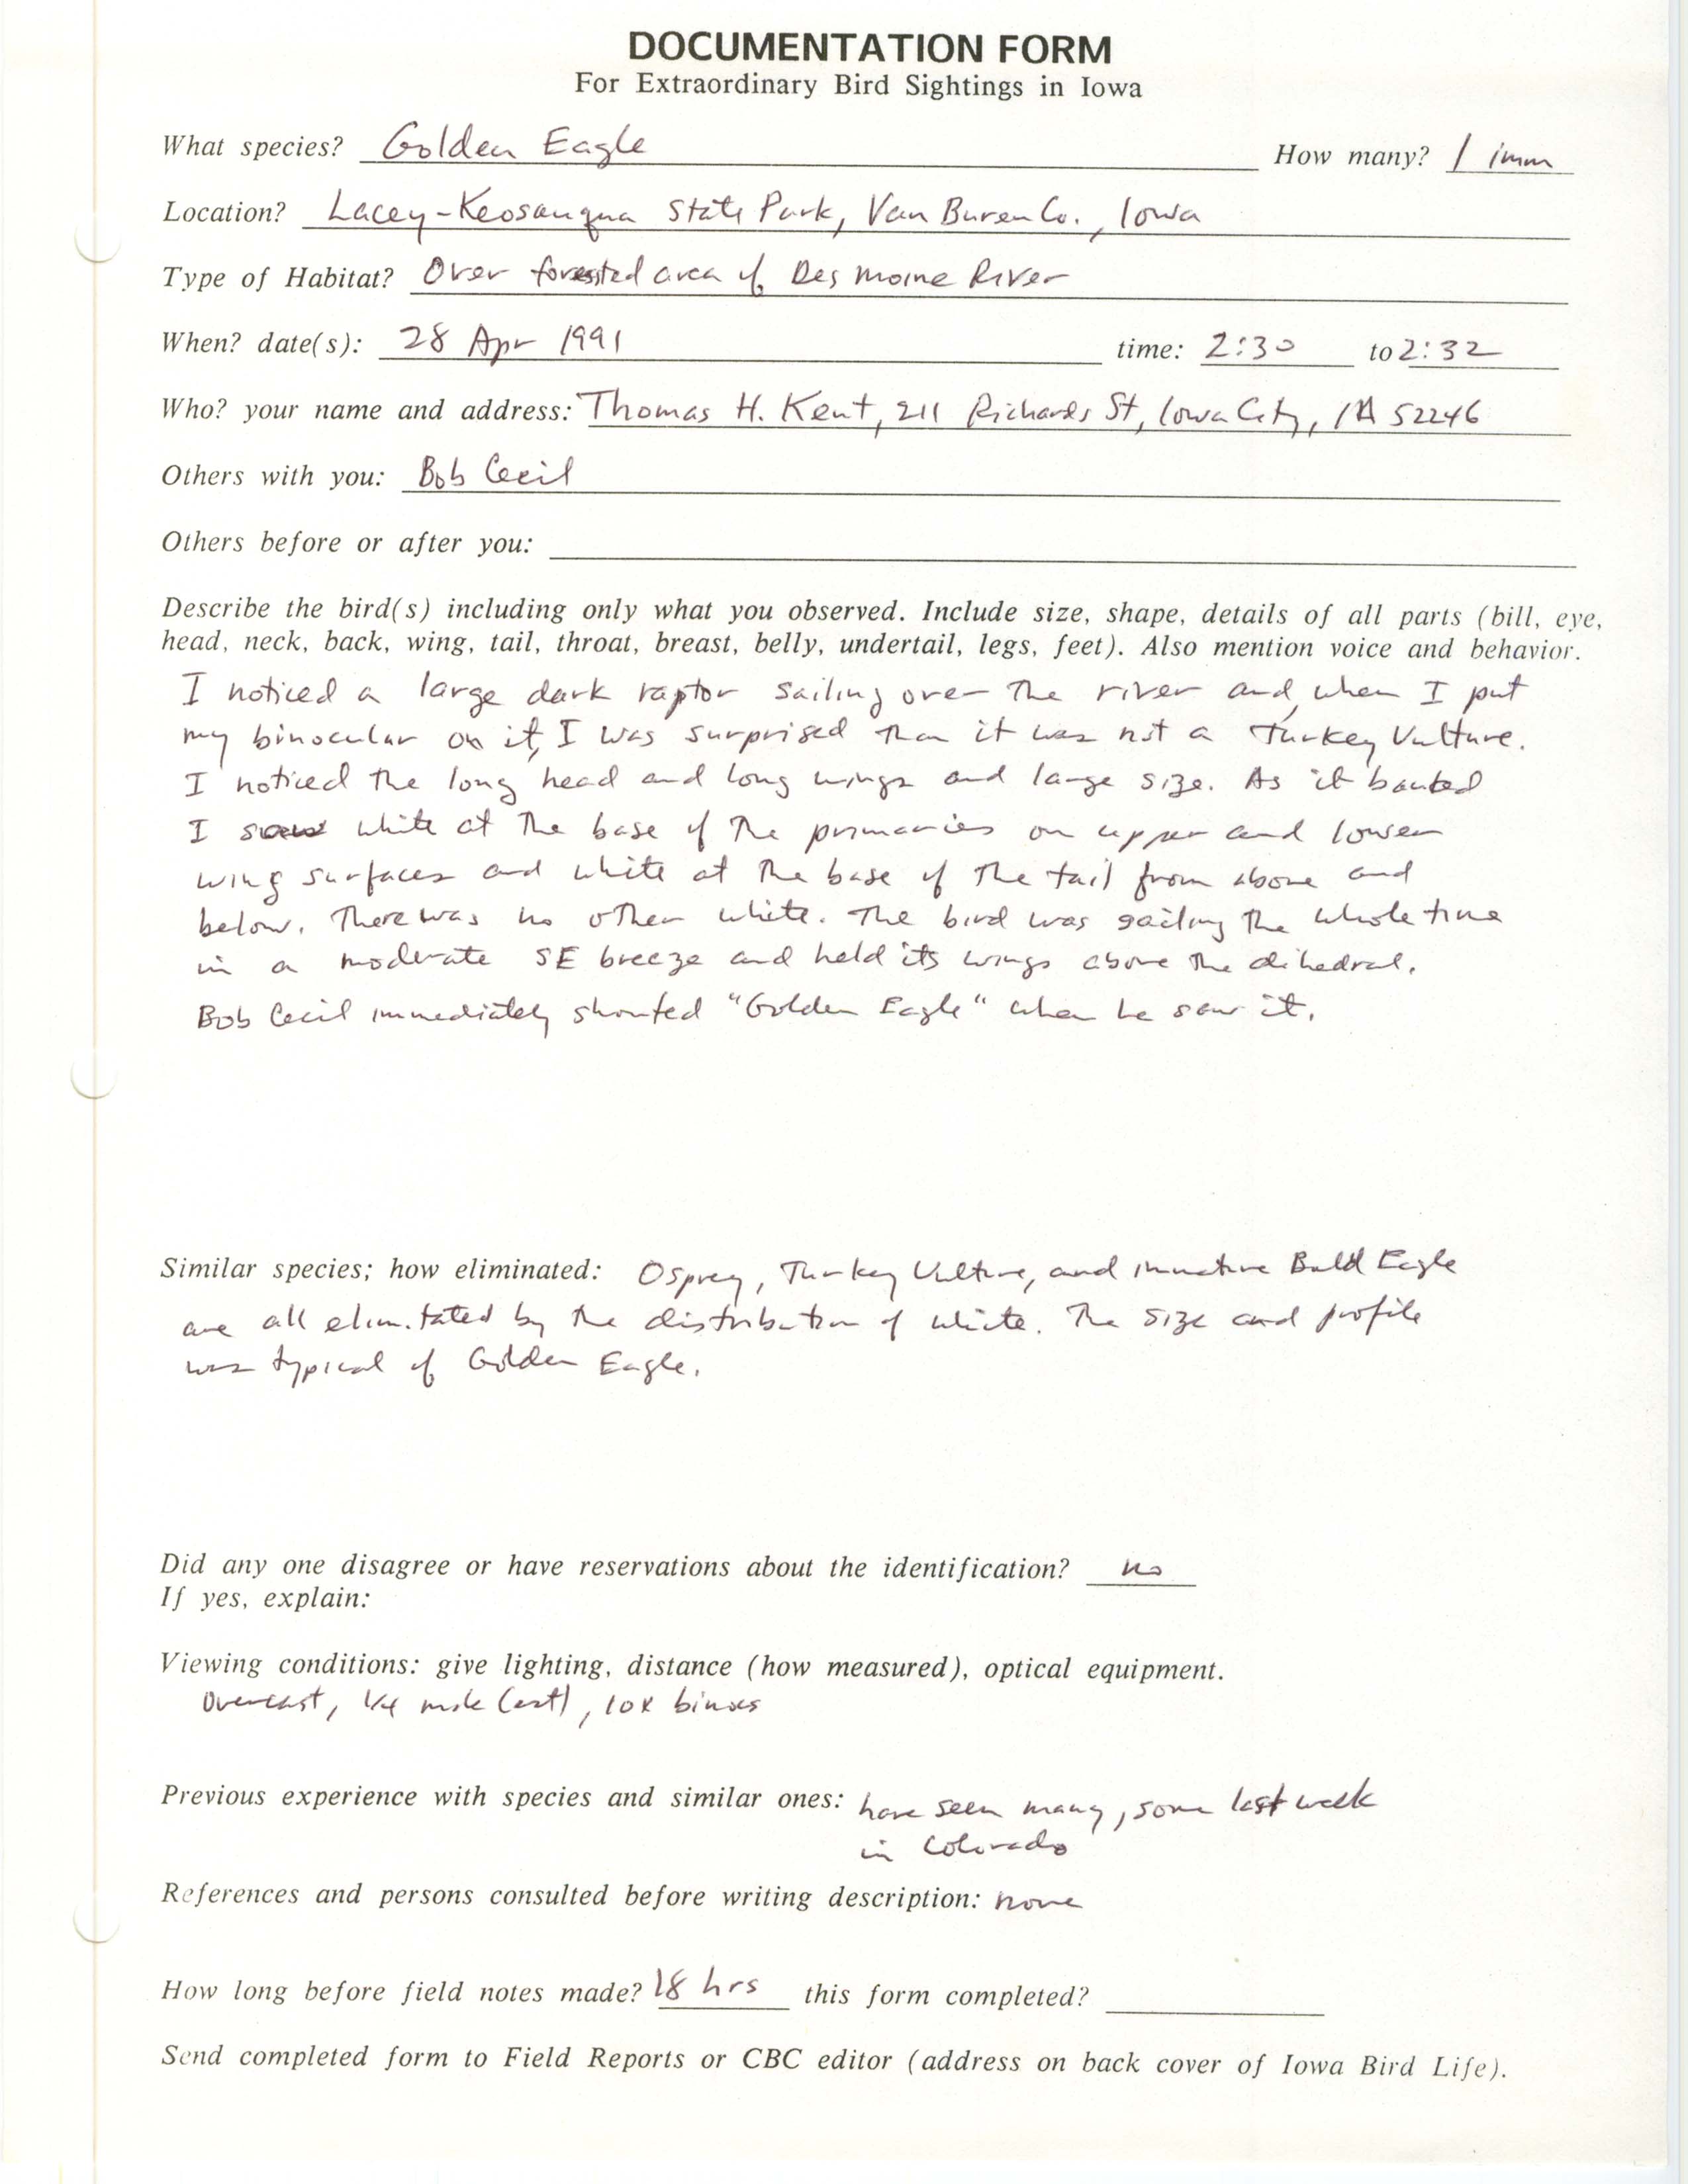 Rare bird documentation form for Golden Eagle at Lacey-Keosauqua State Park, 1991